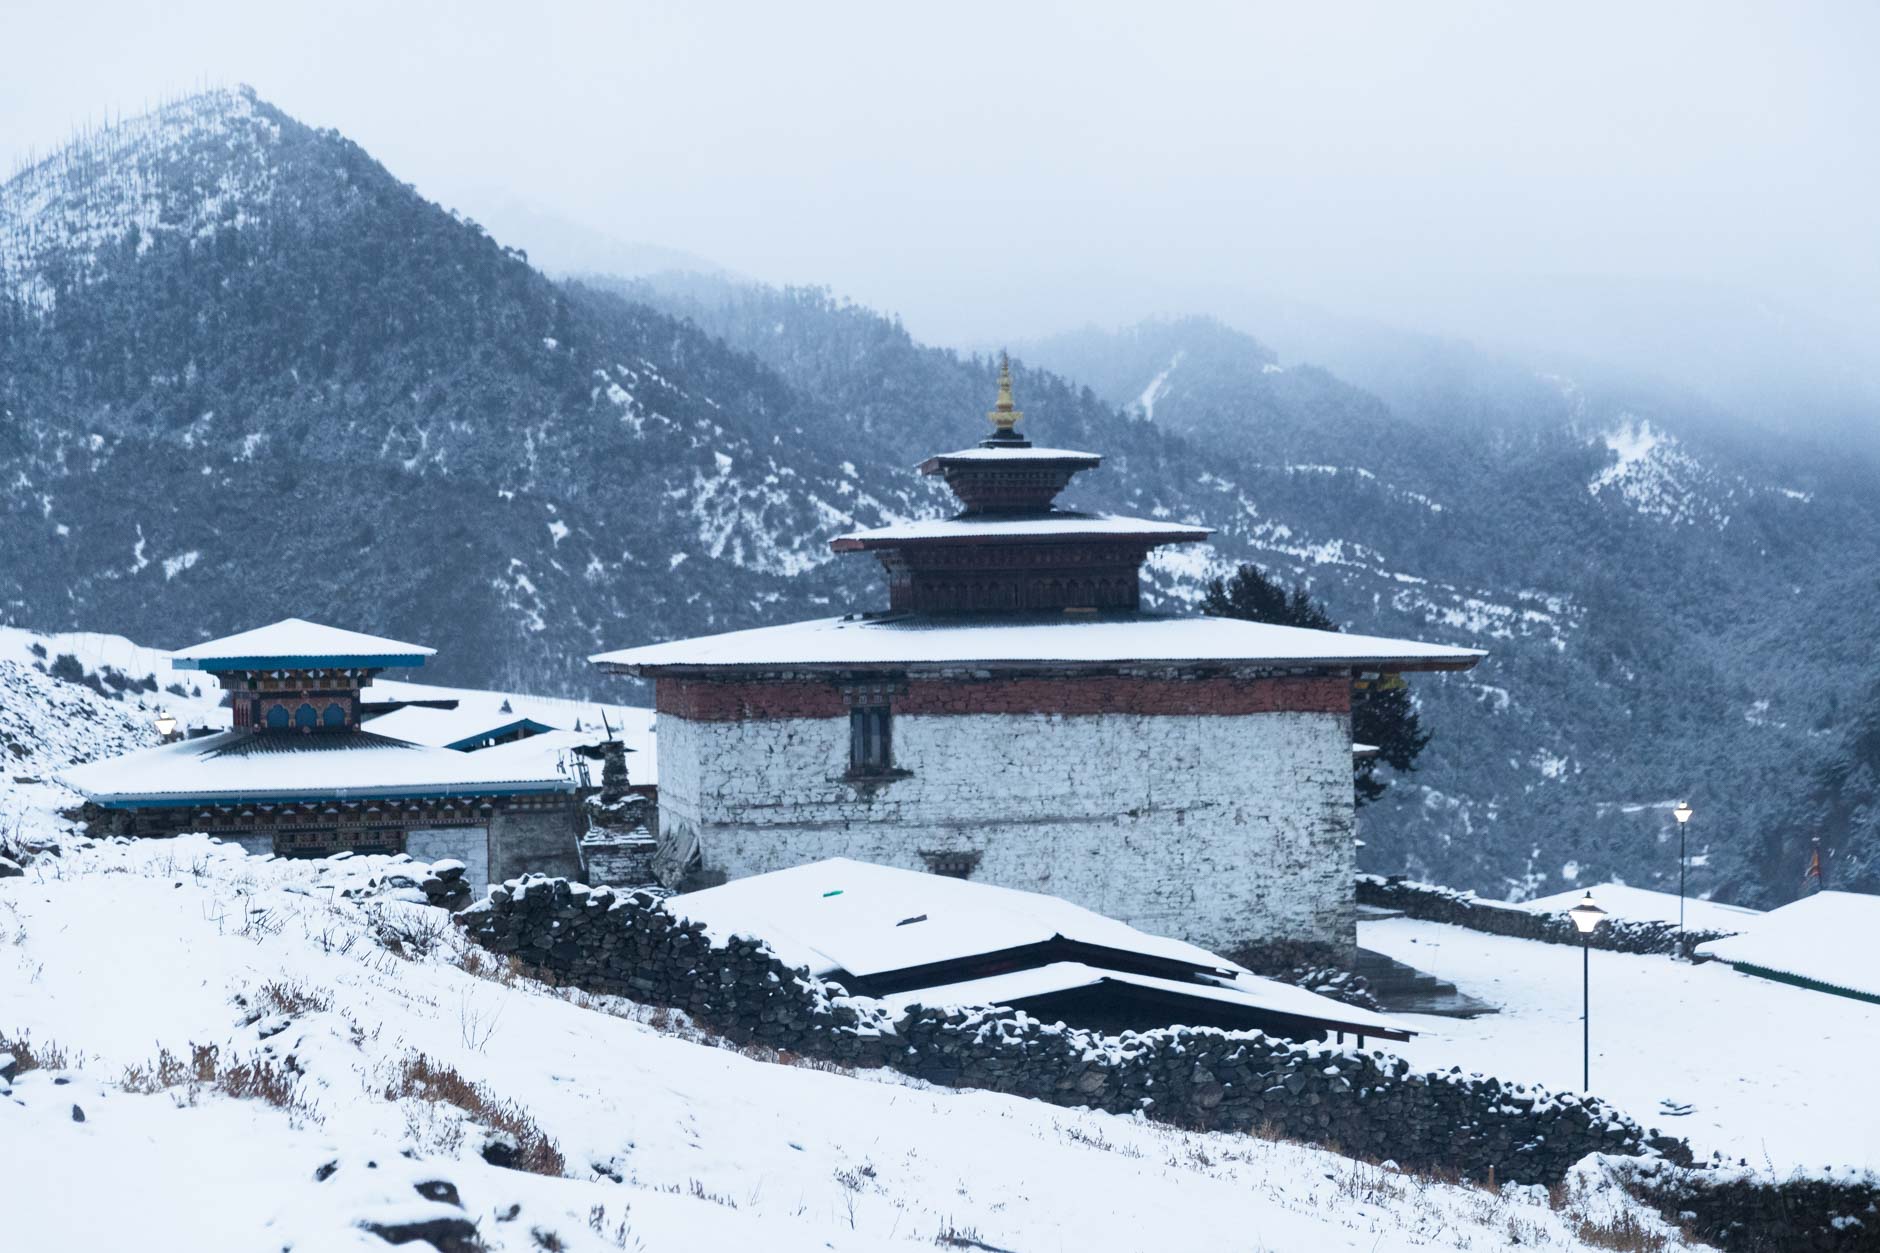 A snowy temple in Merak, Bhutan during winter